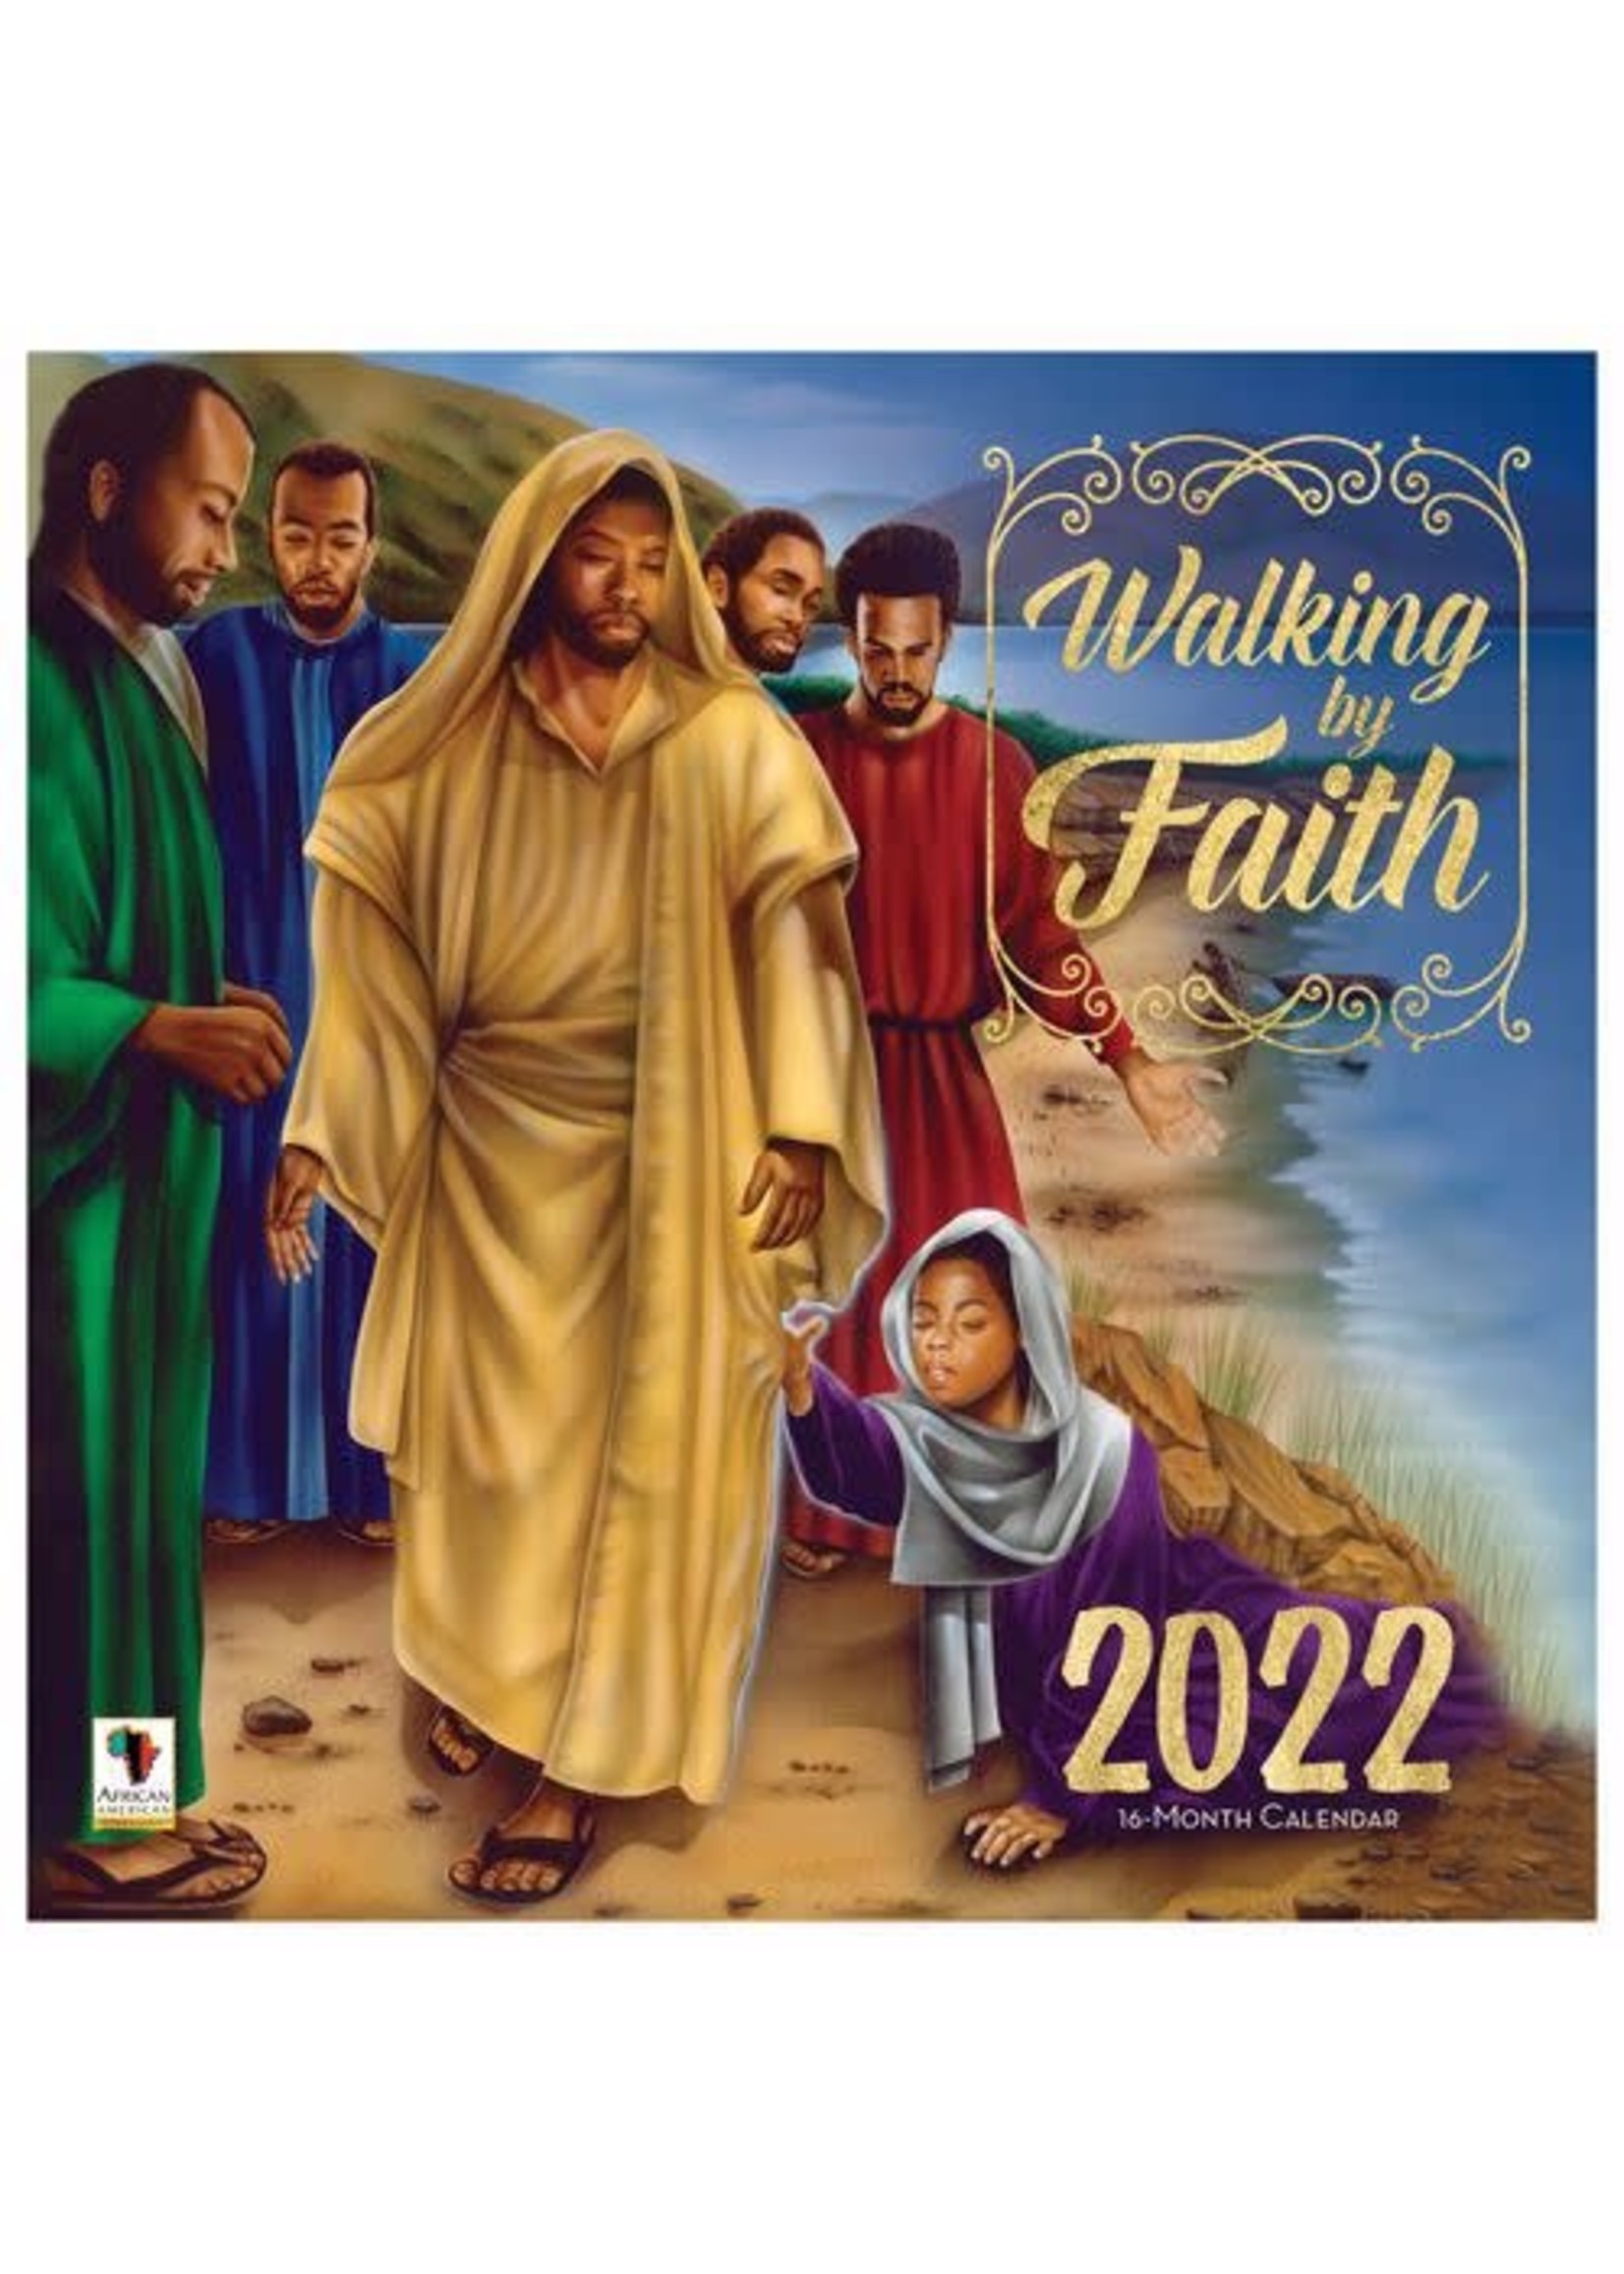 Walking by Faith 2022 Calendar